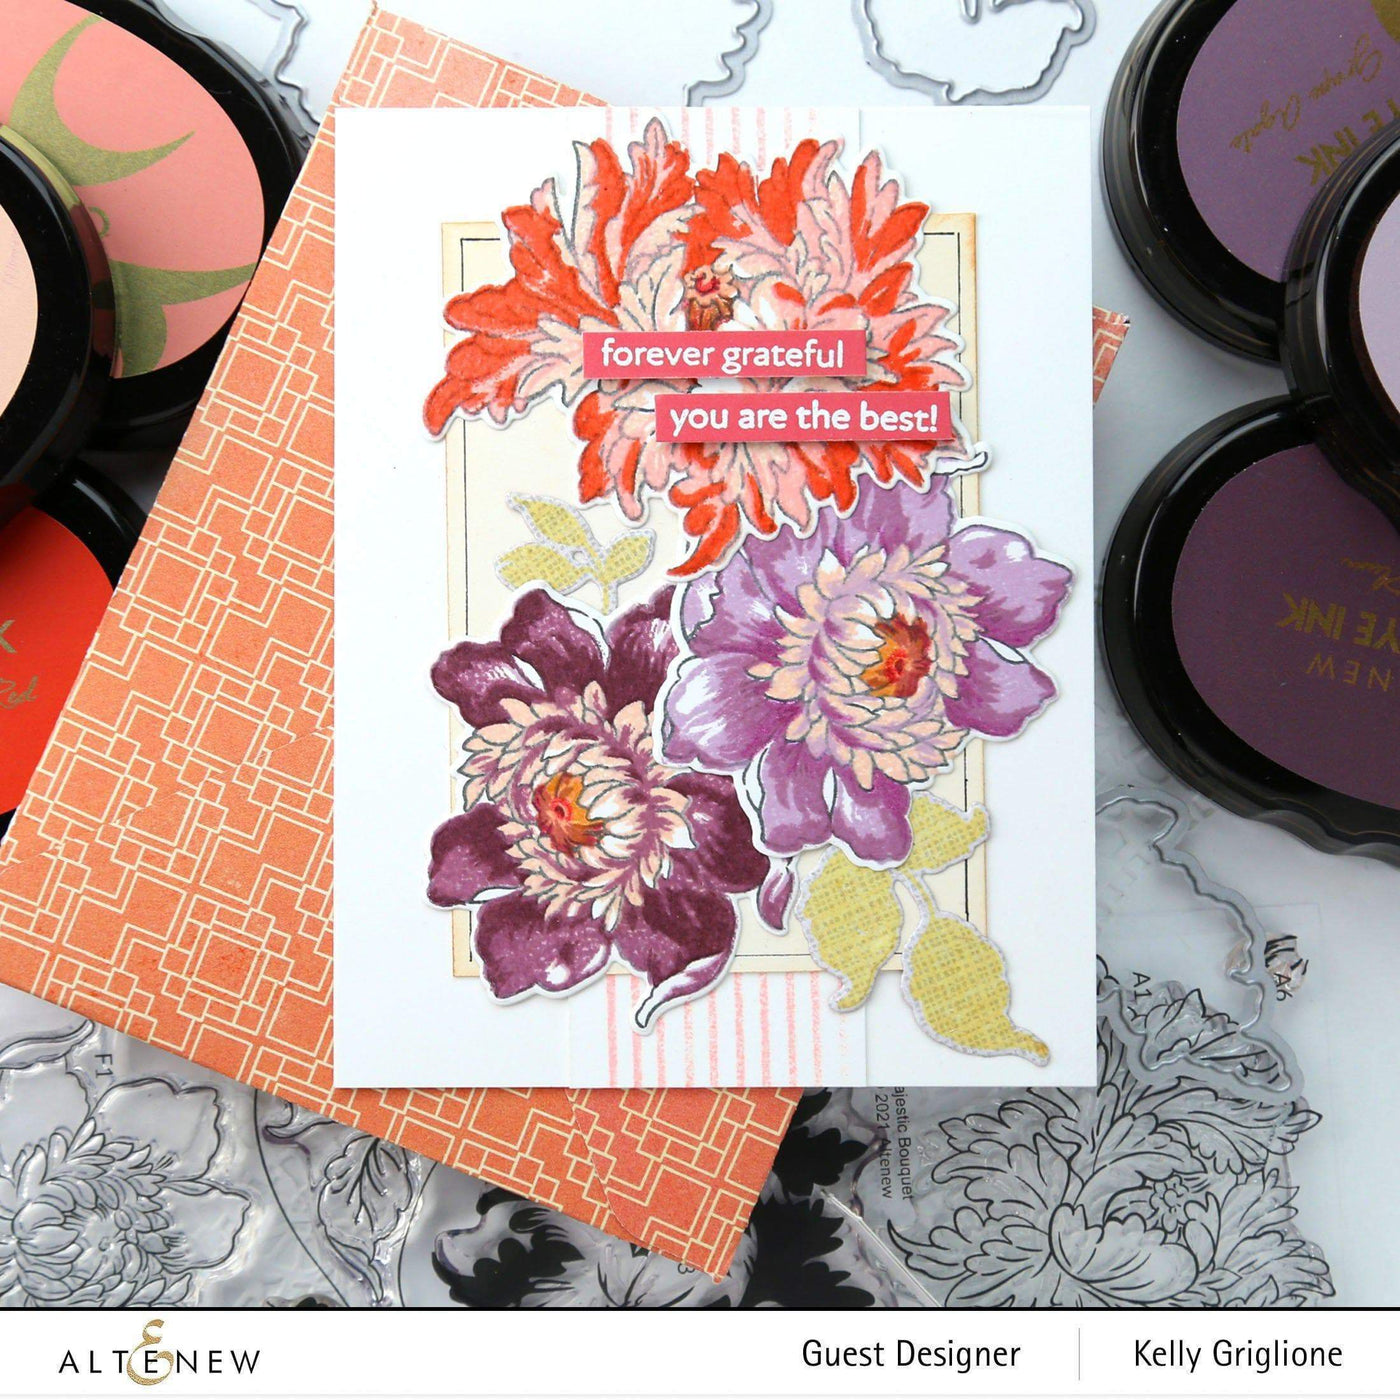 Stamp & Die Bundle Majestic Bouquet